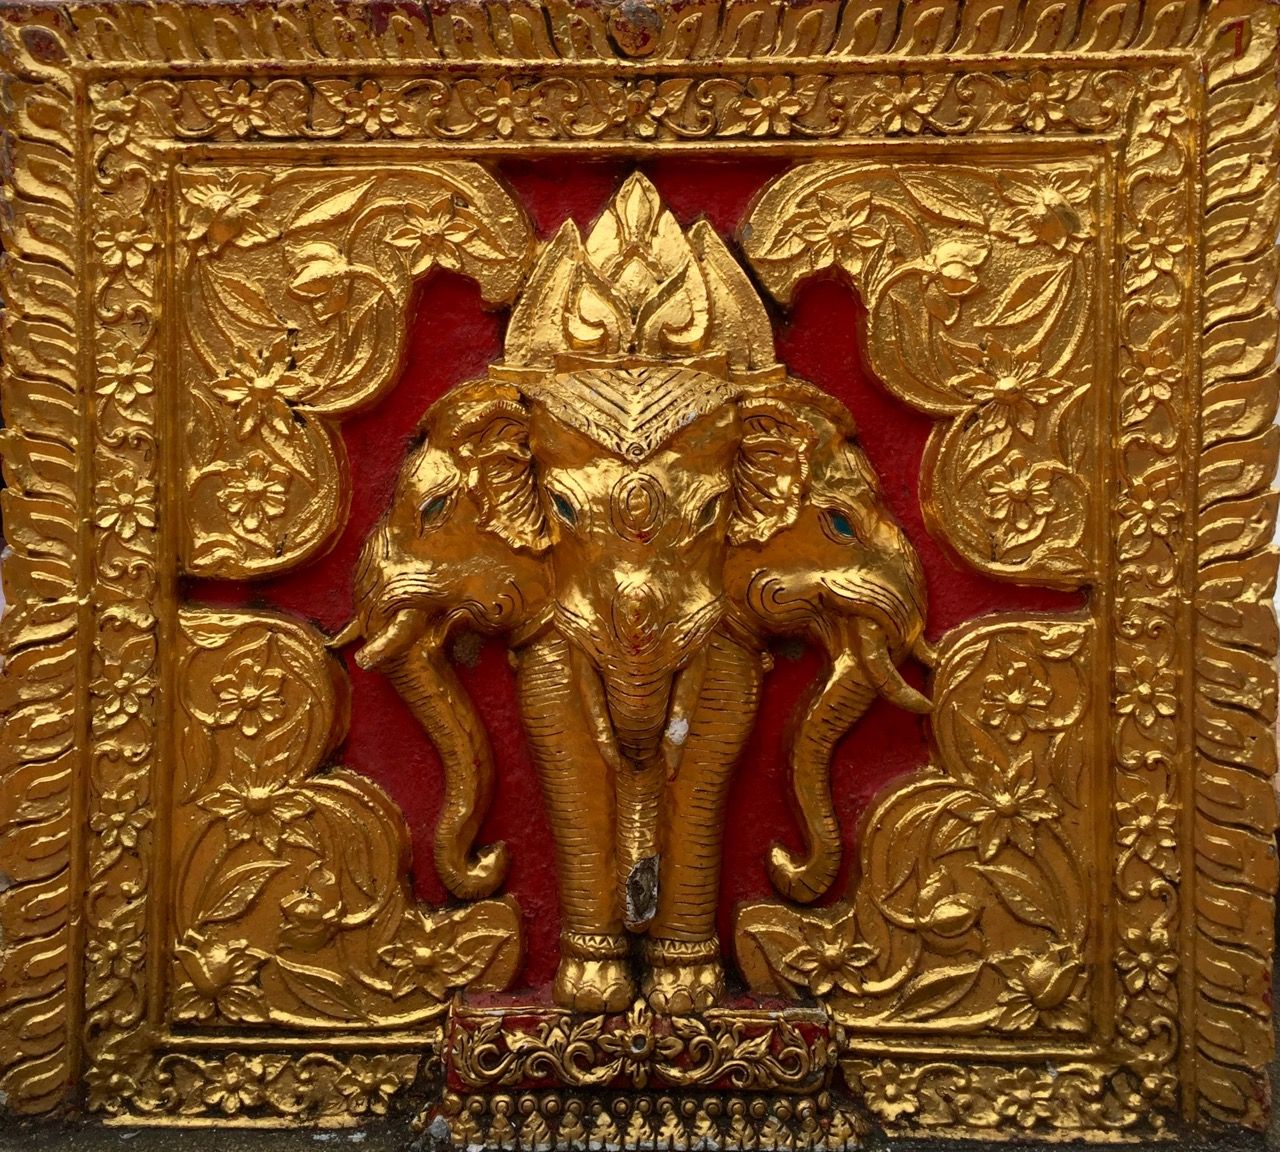 Gold decoration of elephants.